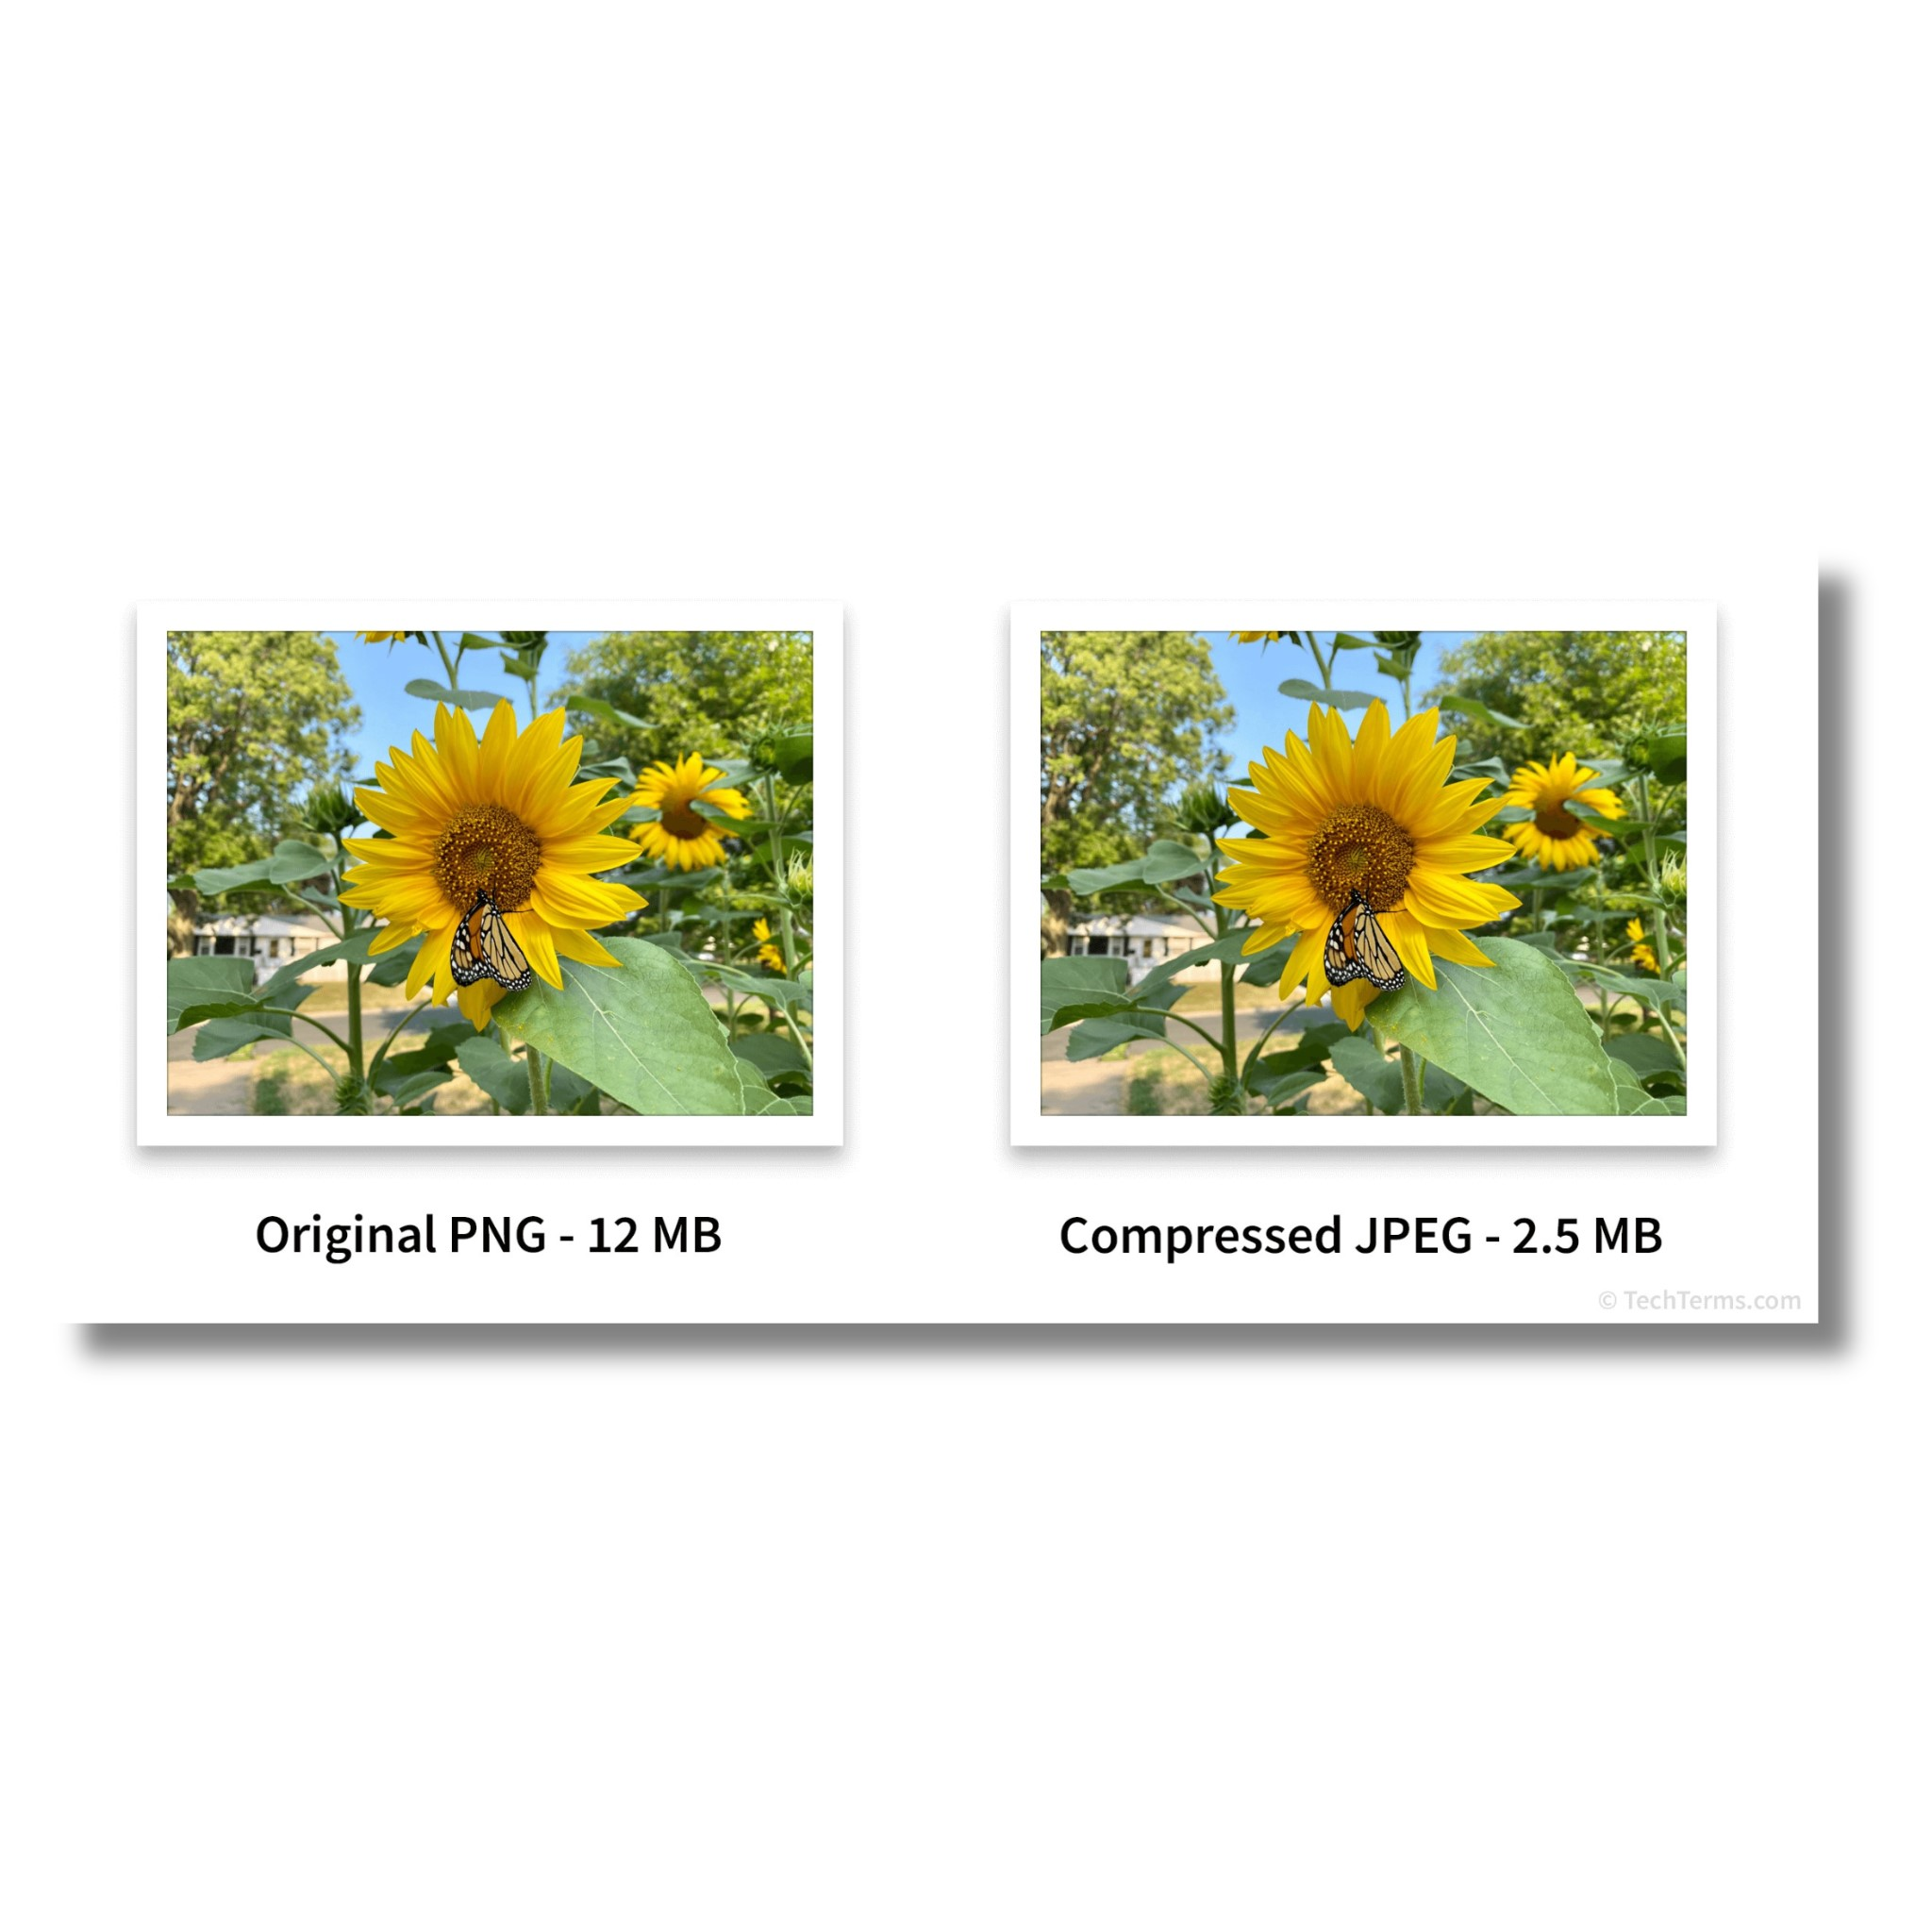 Image compression 